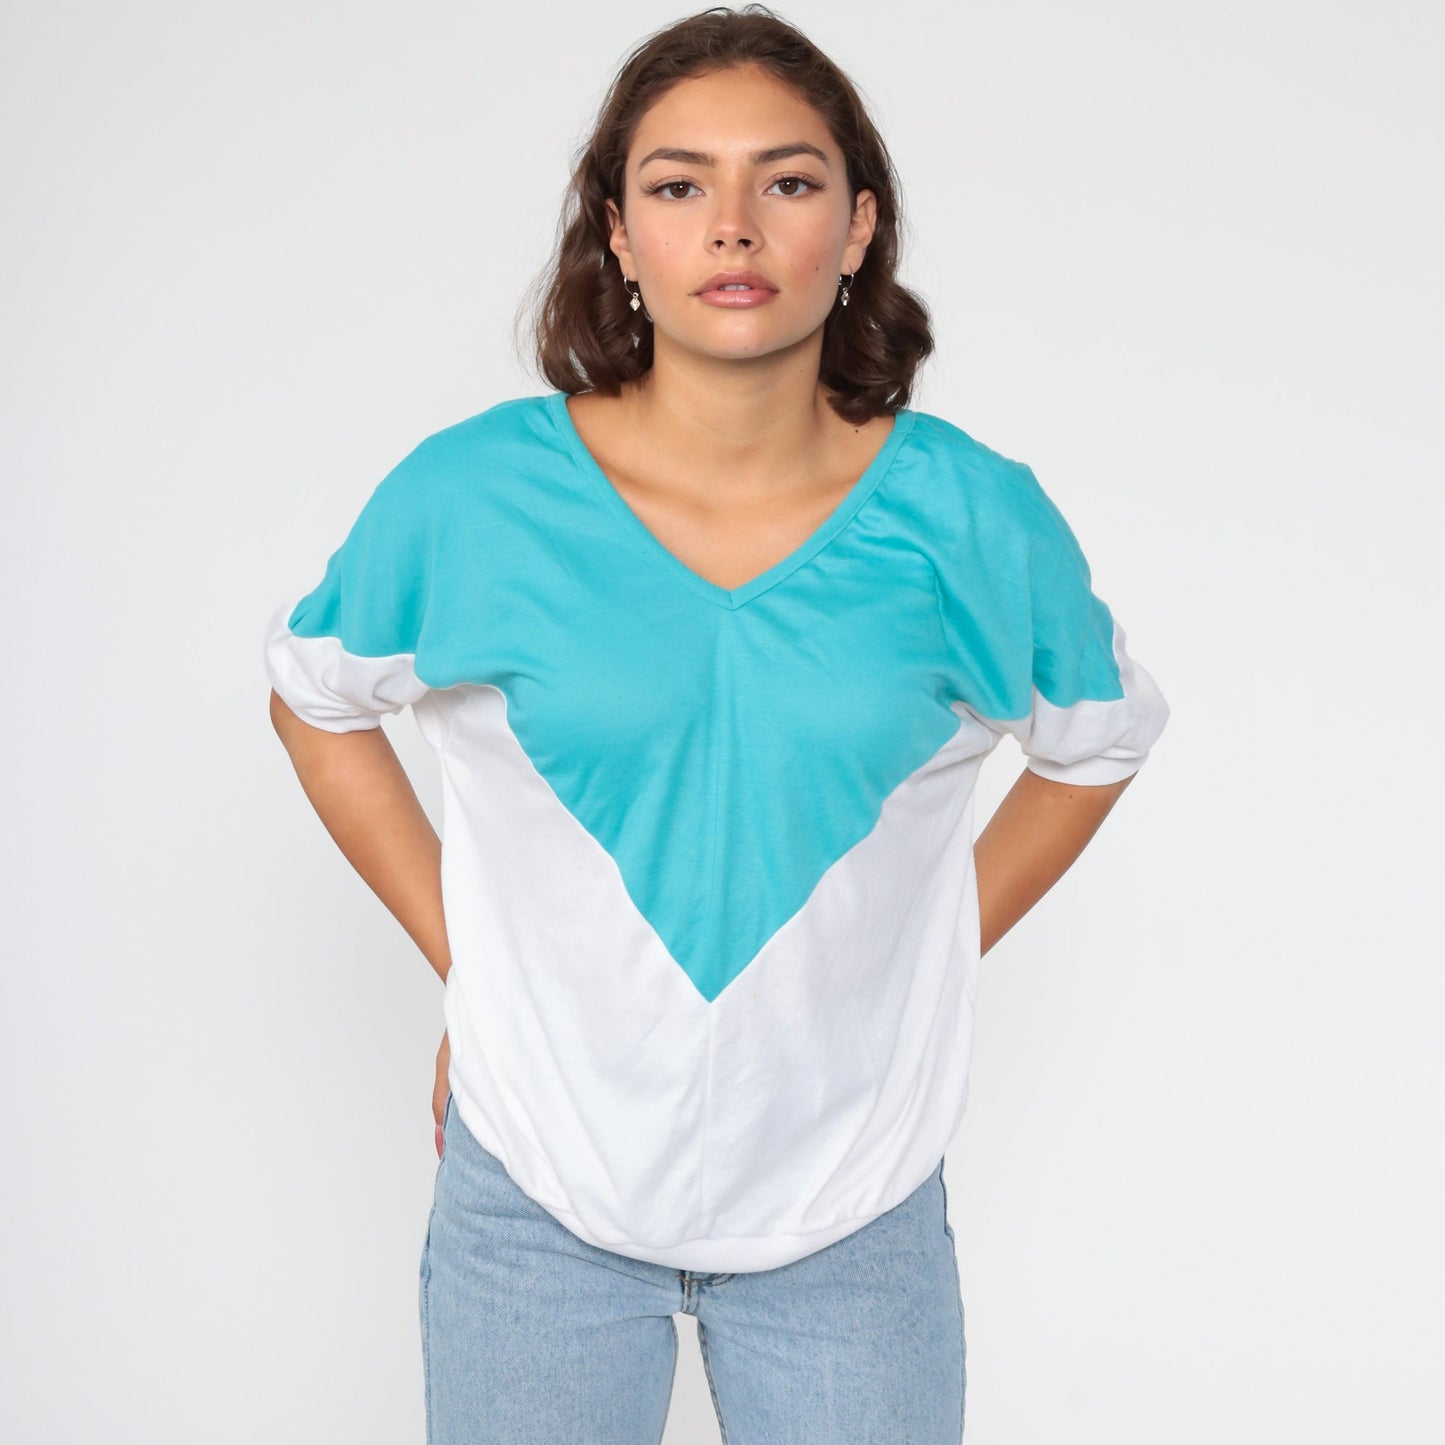 Color Block Shirt Turquoise White Top 80s V Neck Shirt 1/2 Dolman Sleeve Top Retro 1980s Vintage Slouch Chevron Top Large